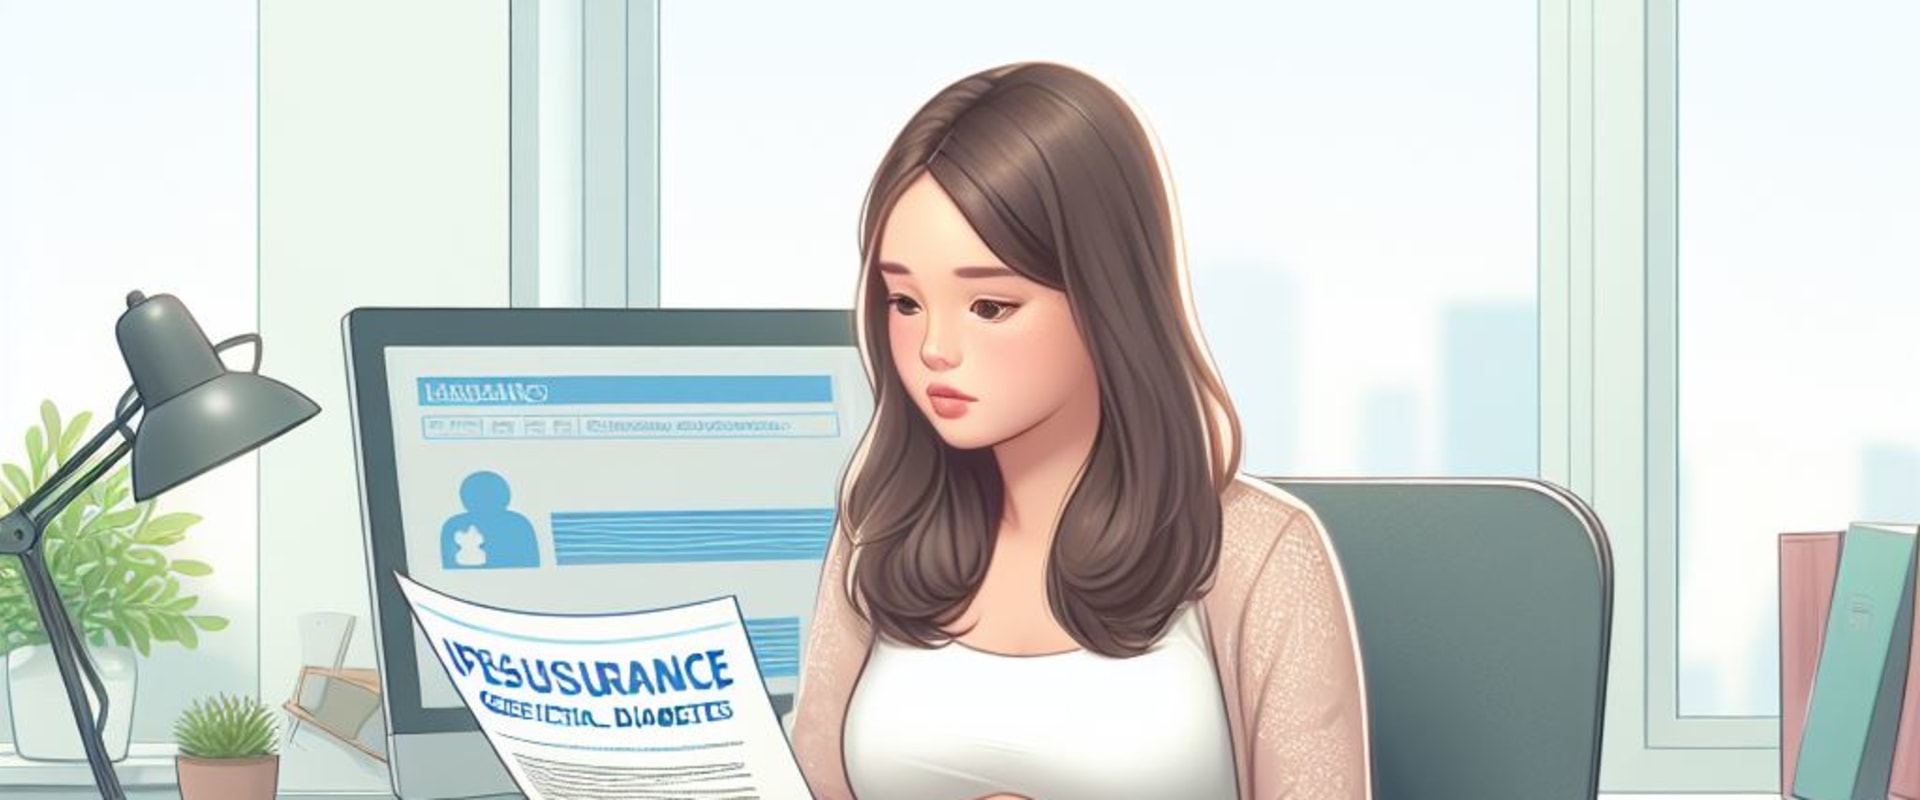 navigating gestational diabetes life insurance